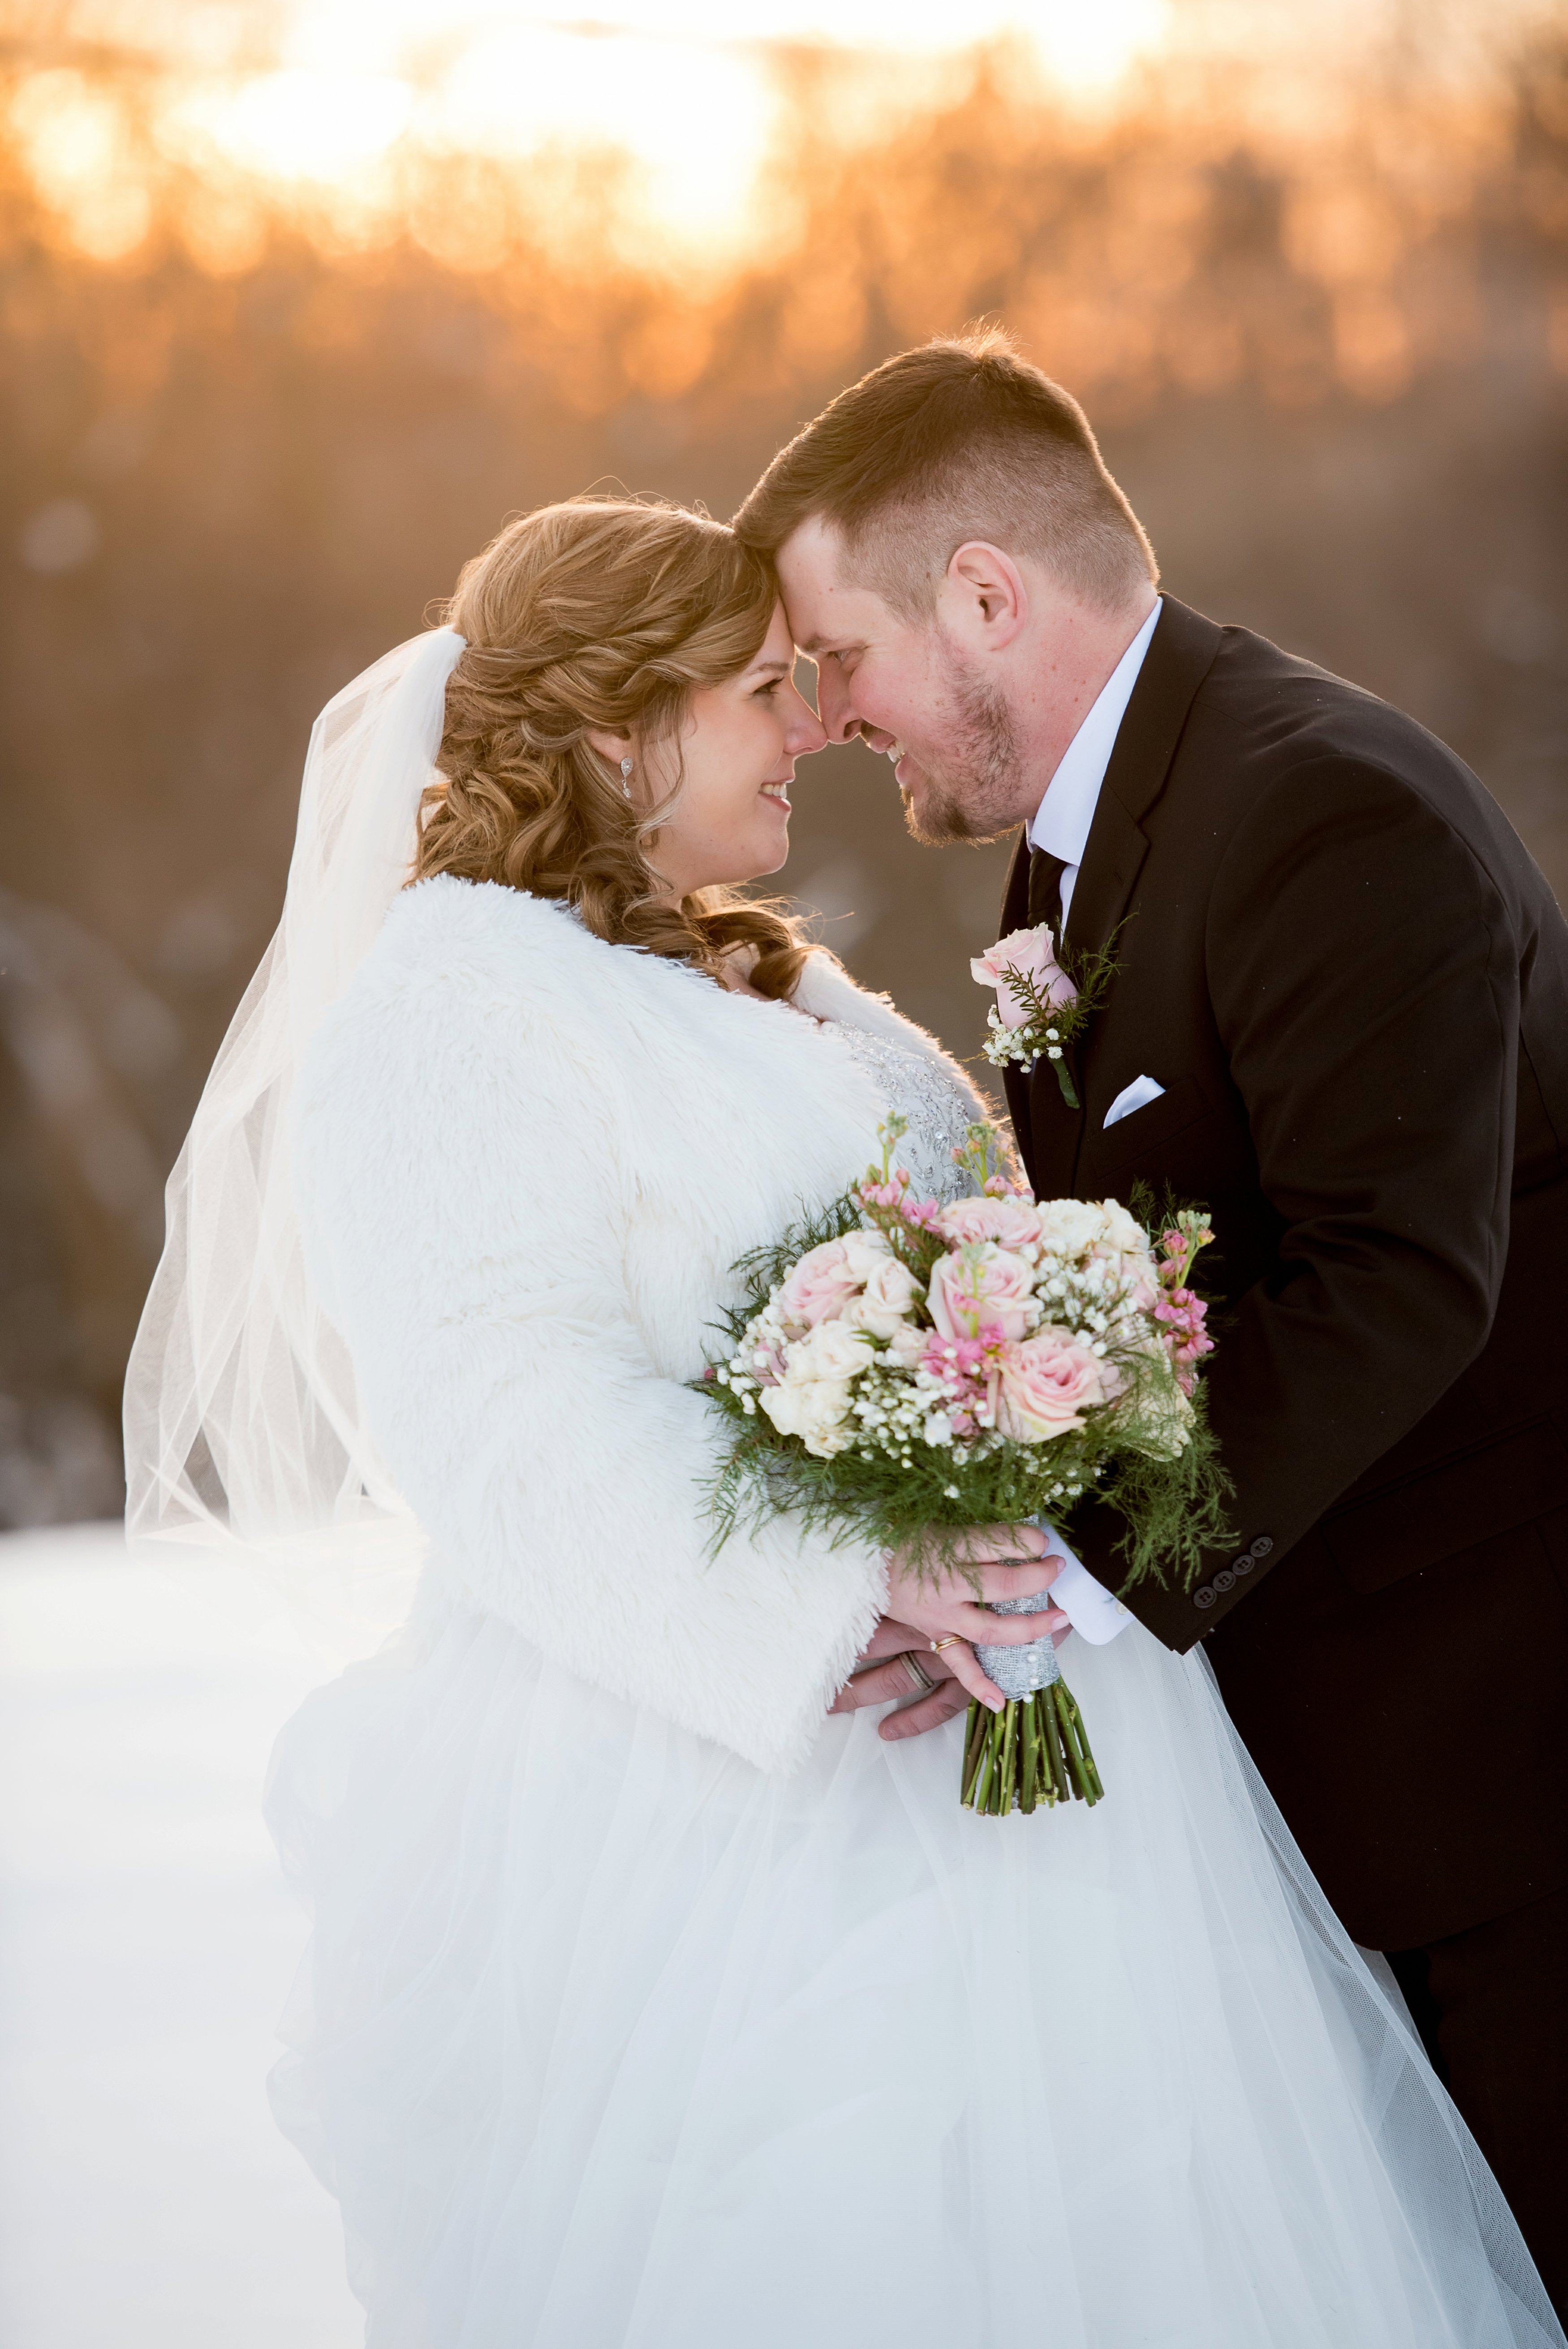 mustard seed gardens wedding | Sarah & Rachel Wedding Photographers | Winter Wedding | winter sunset photos